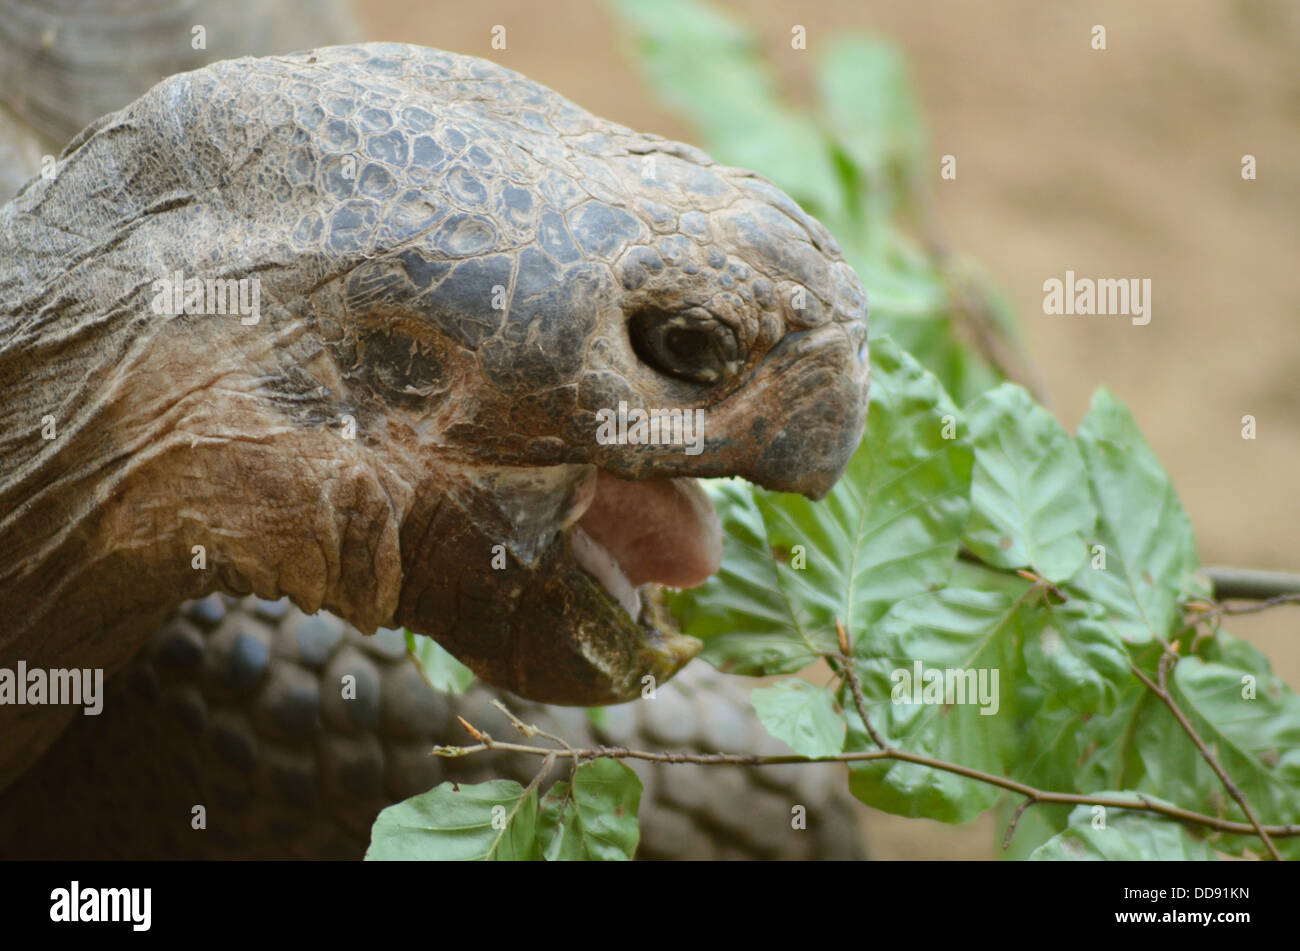 Galápagos tortoise eating a leaf Stock Photo